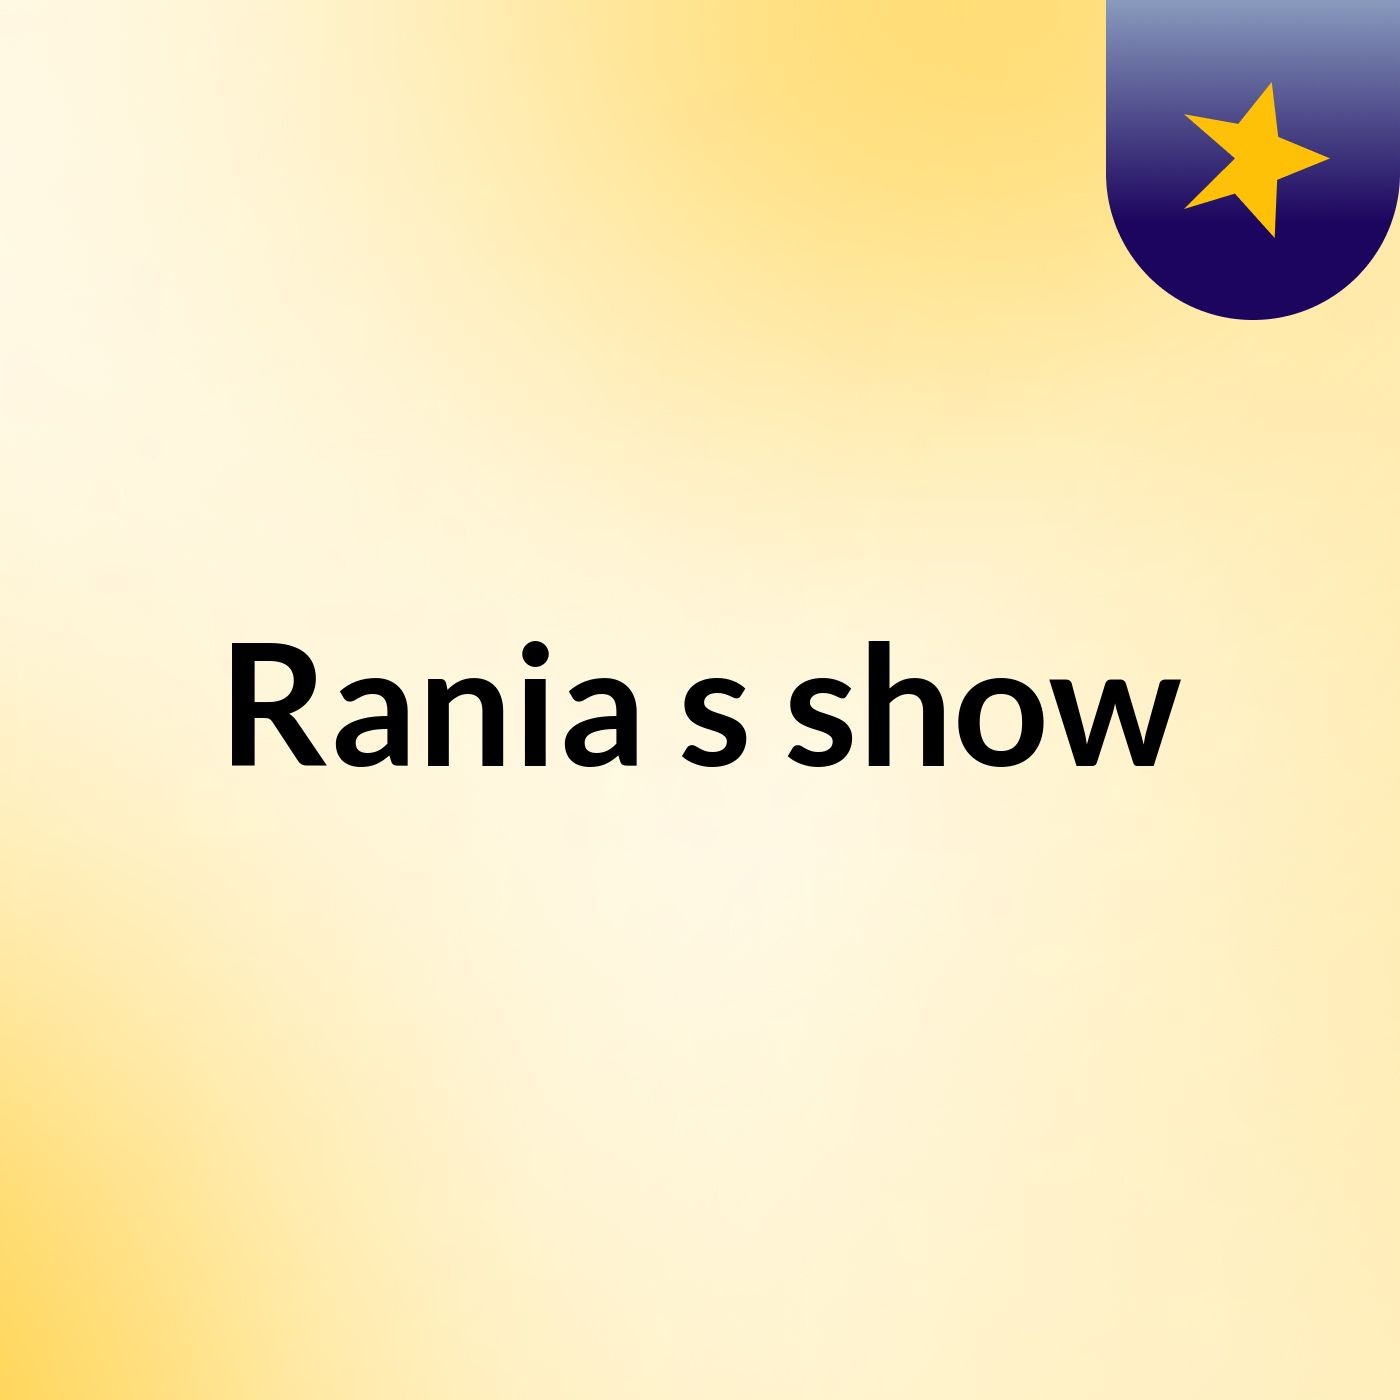 Rania's show